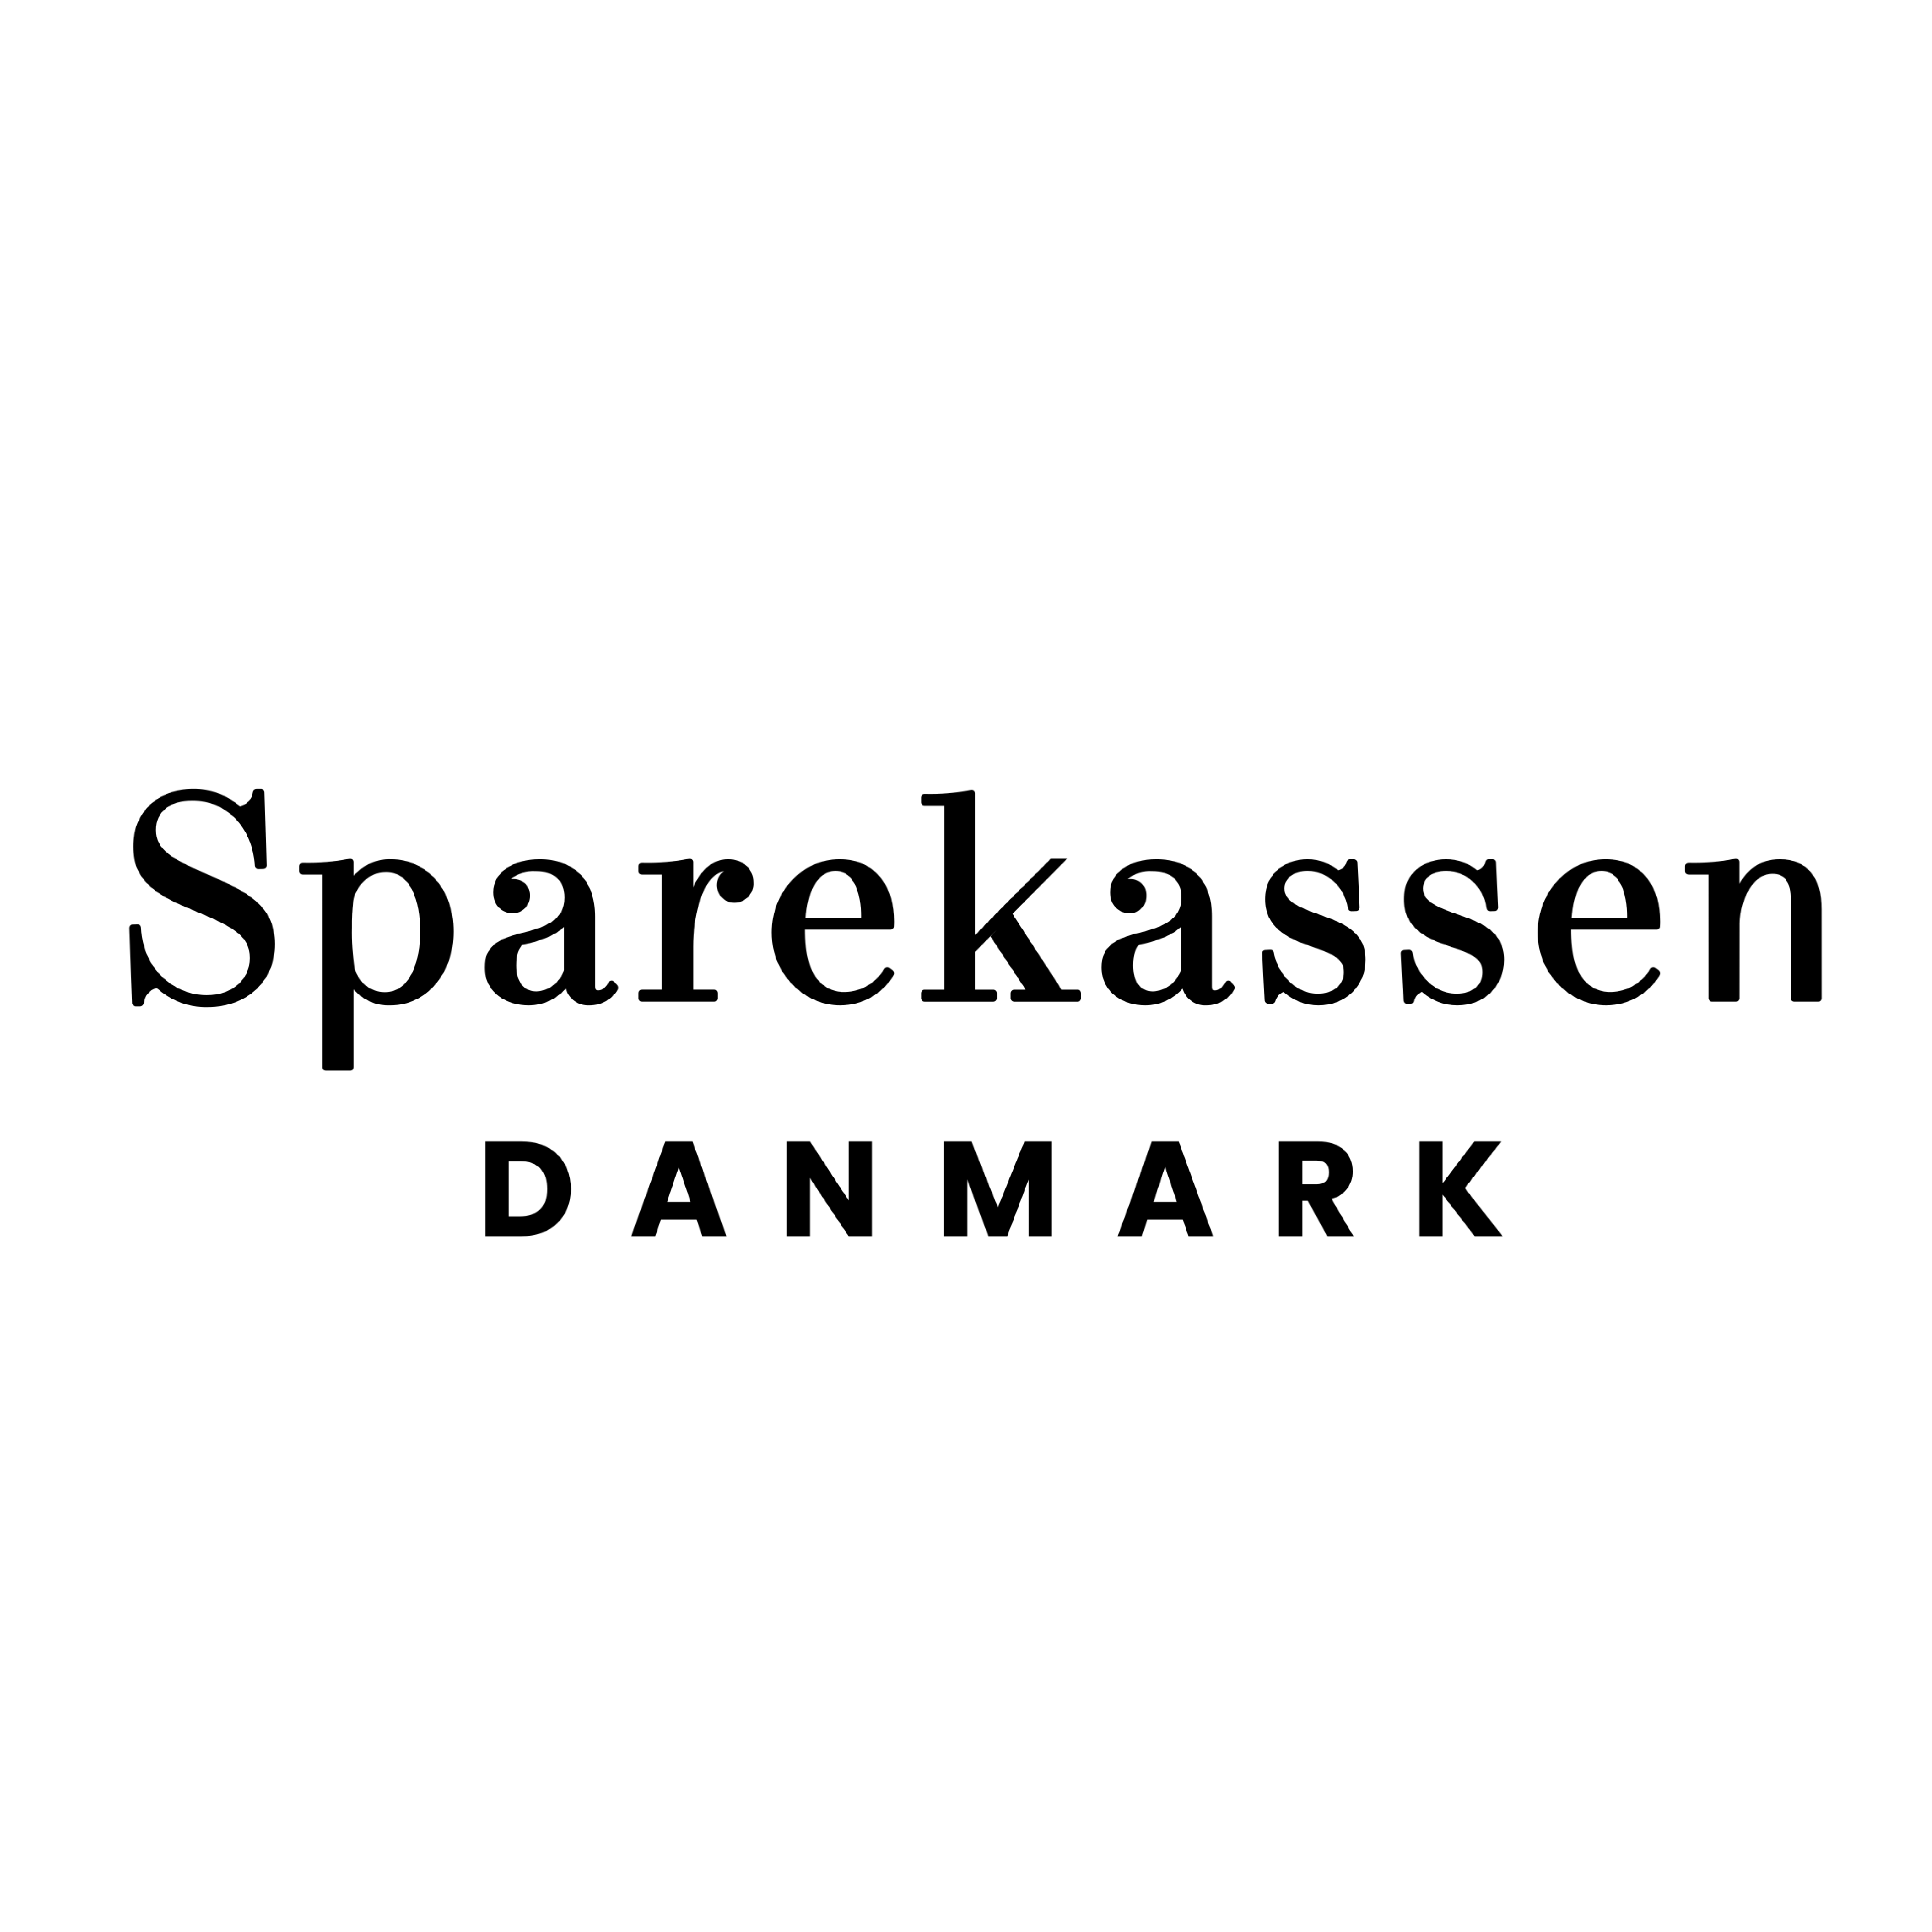 Sparkassen Danmark logo